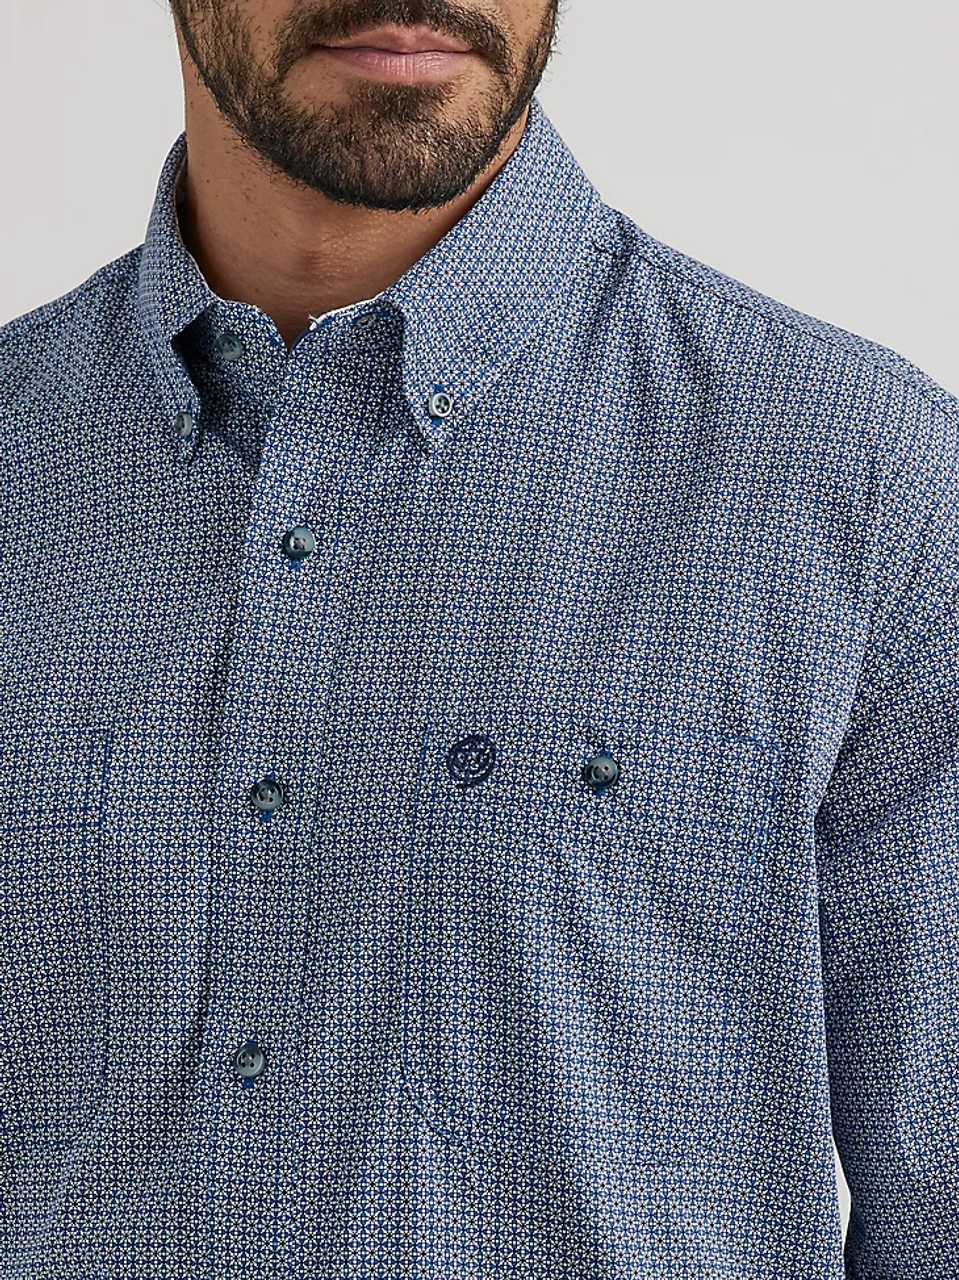 Wrangler Mens George Strait Blue Burst Print Button-Down Shirt - 112338107